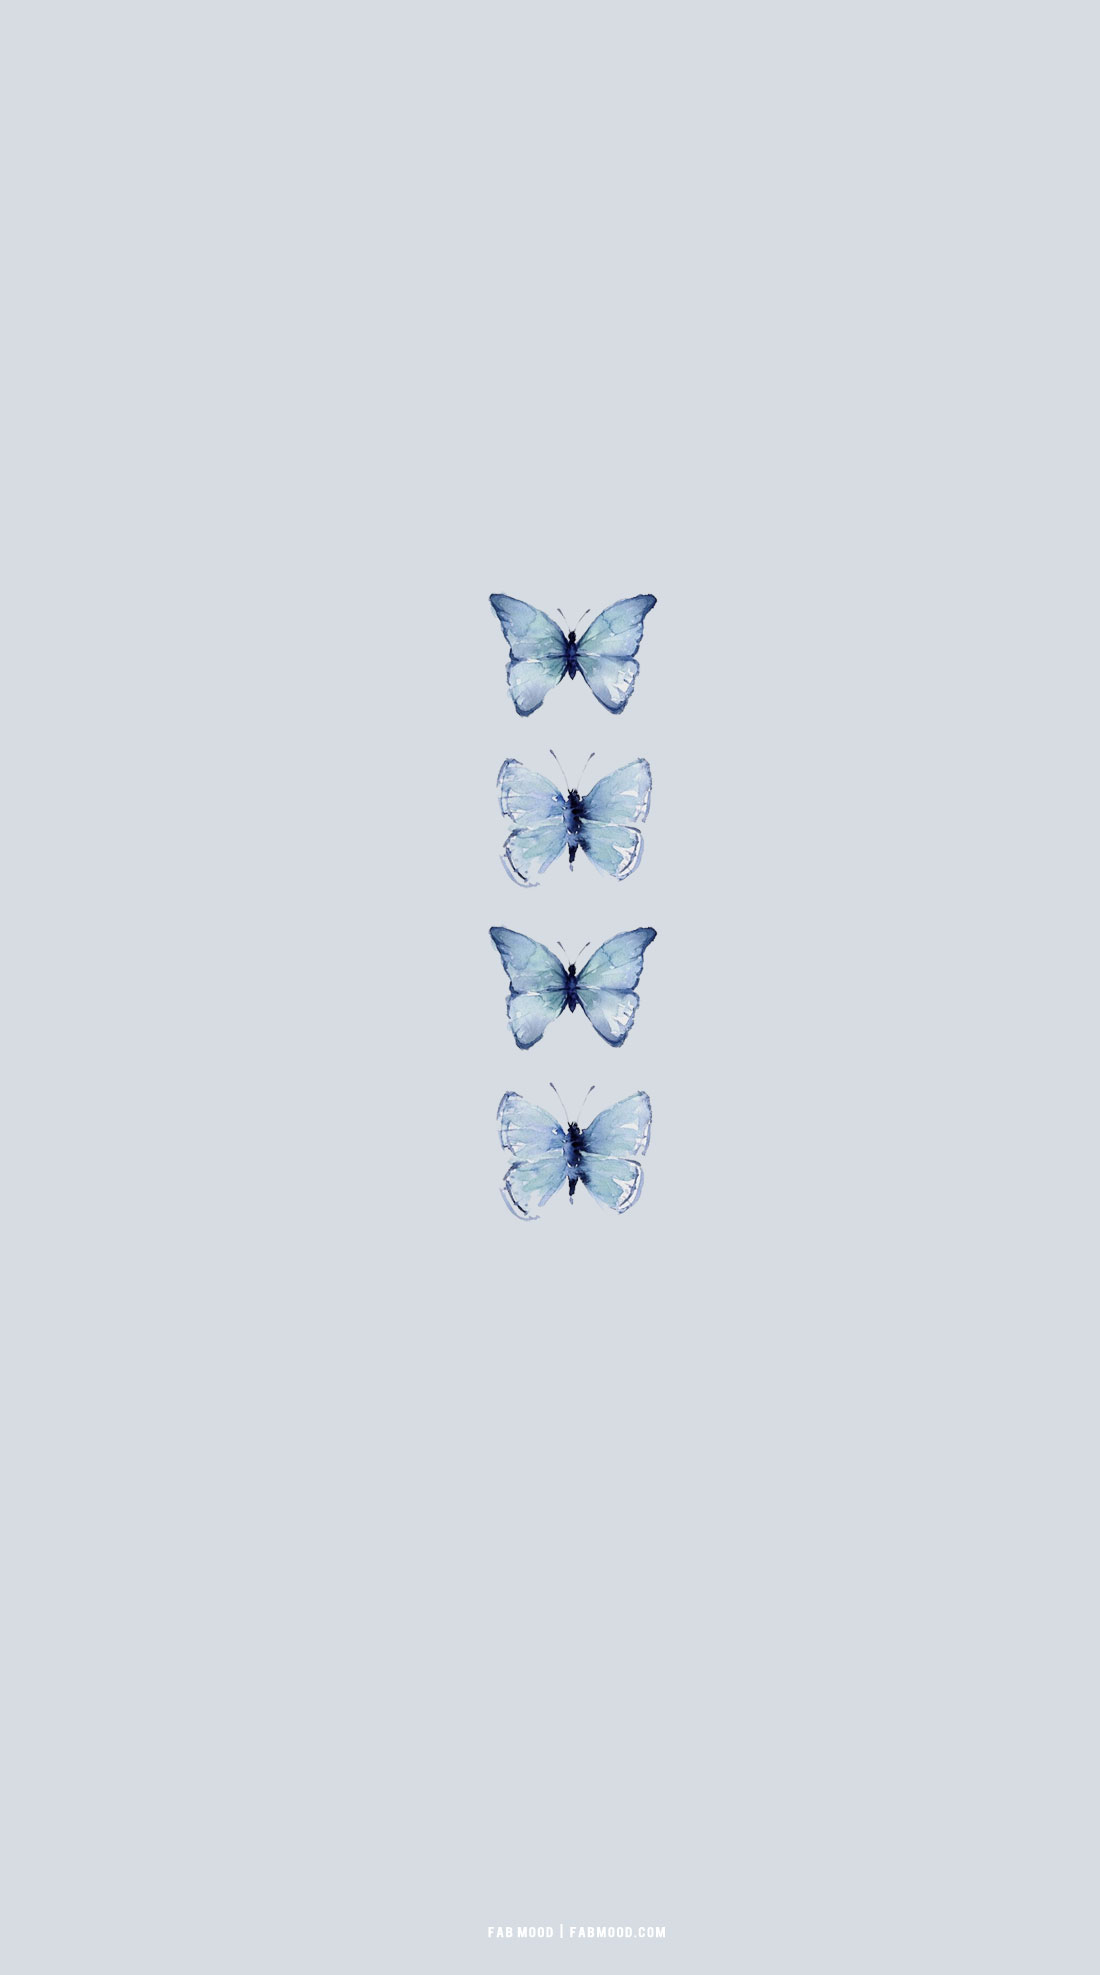 40 Blue Wallpaper Designs for Phone : Minimalist Heart Blue Background 1 -  Fab Mood